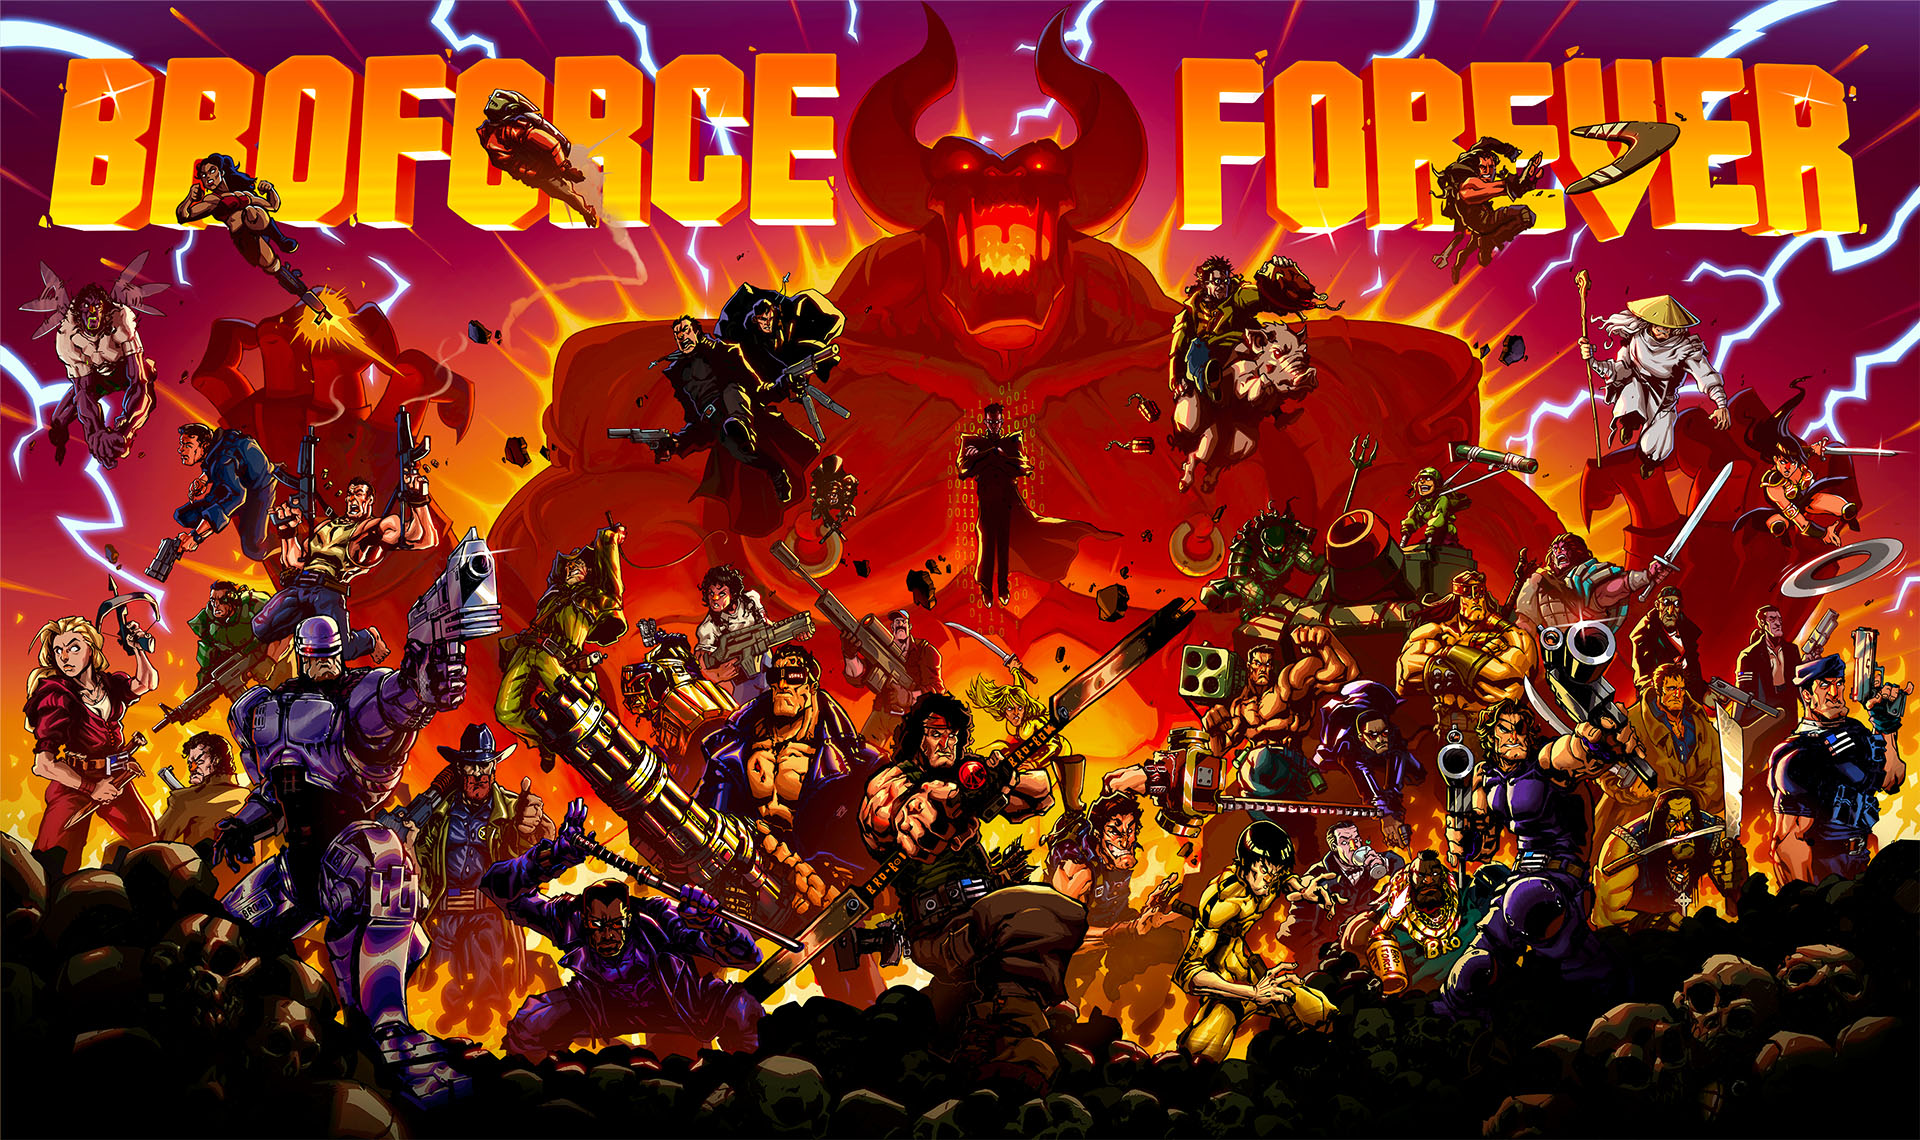 《Broforce》免費大改版今日來襲！「Broforce Forever」6個兄貴、4大挑戰等你玩